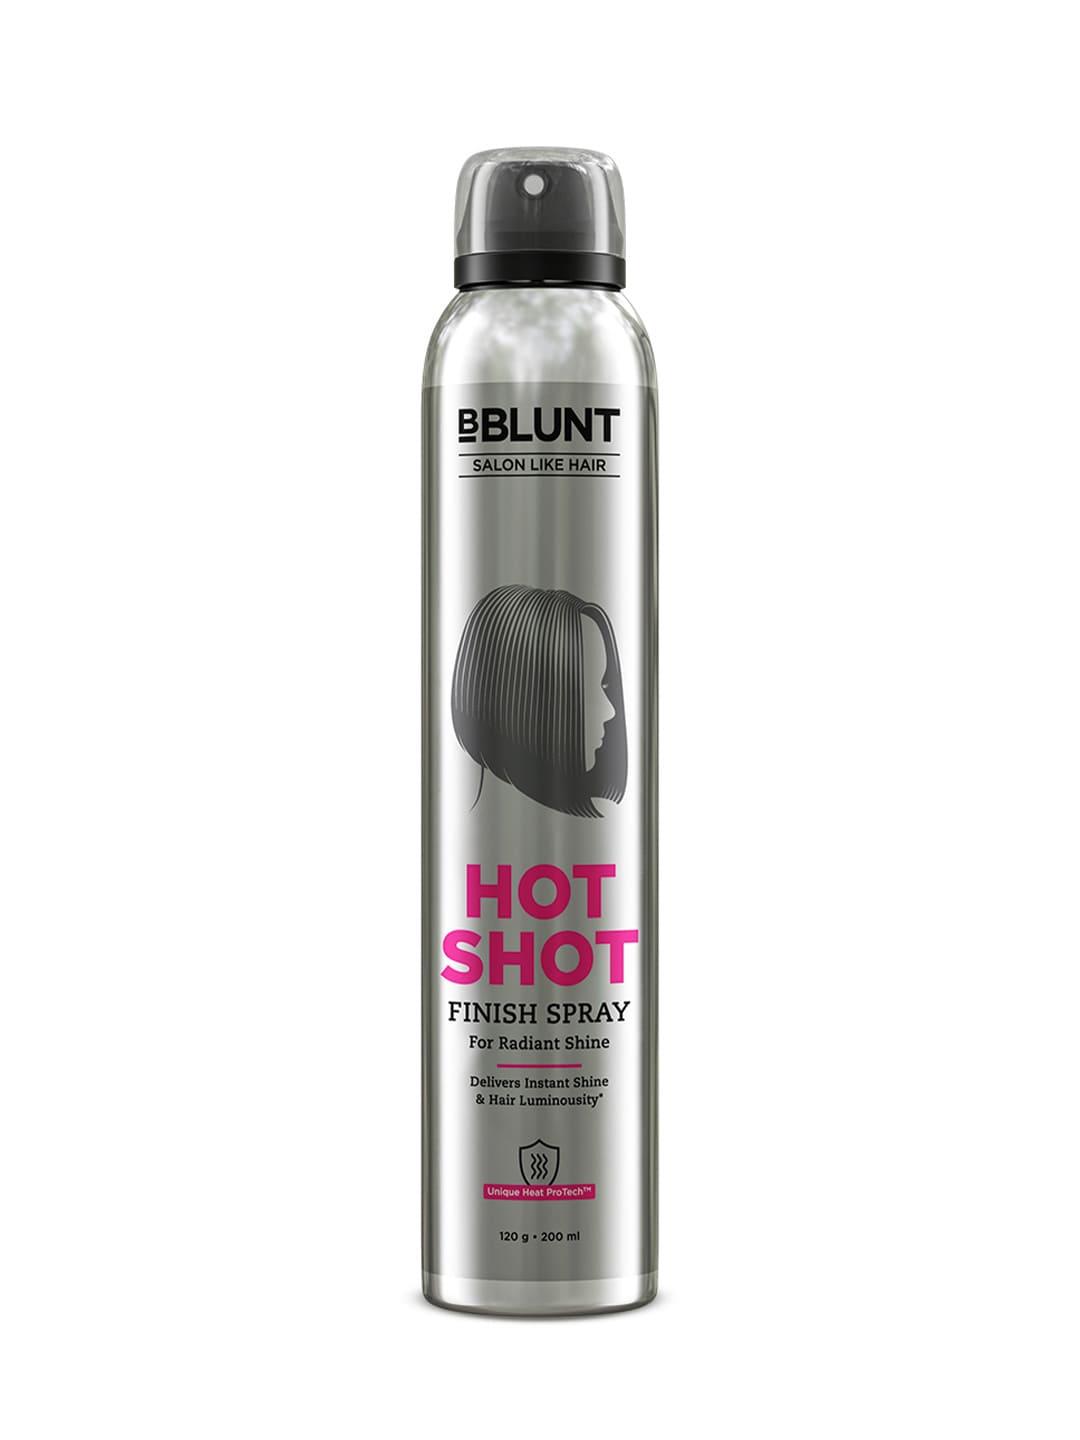 bblunt hot shot finish hair spray for radiant shine - 200 ml